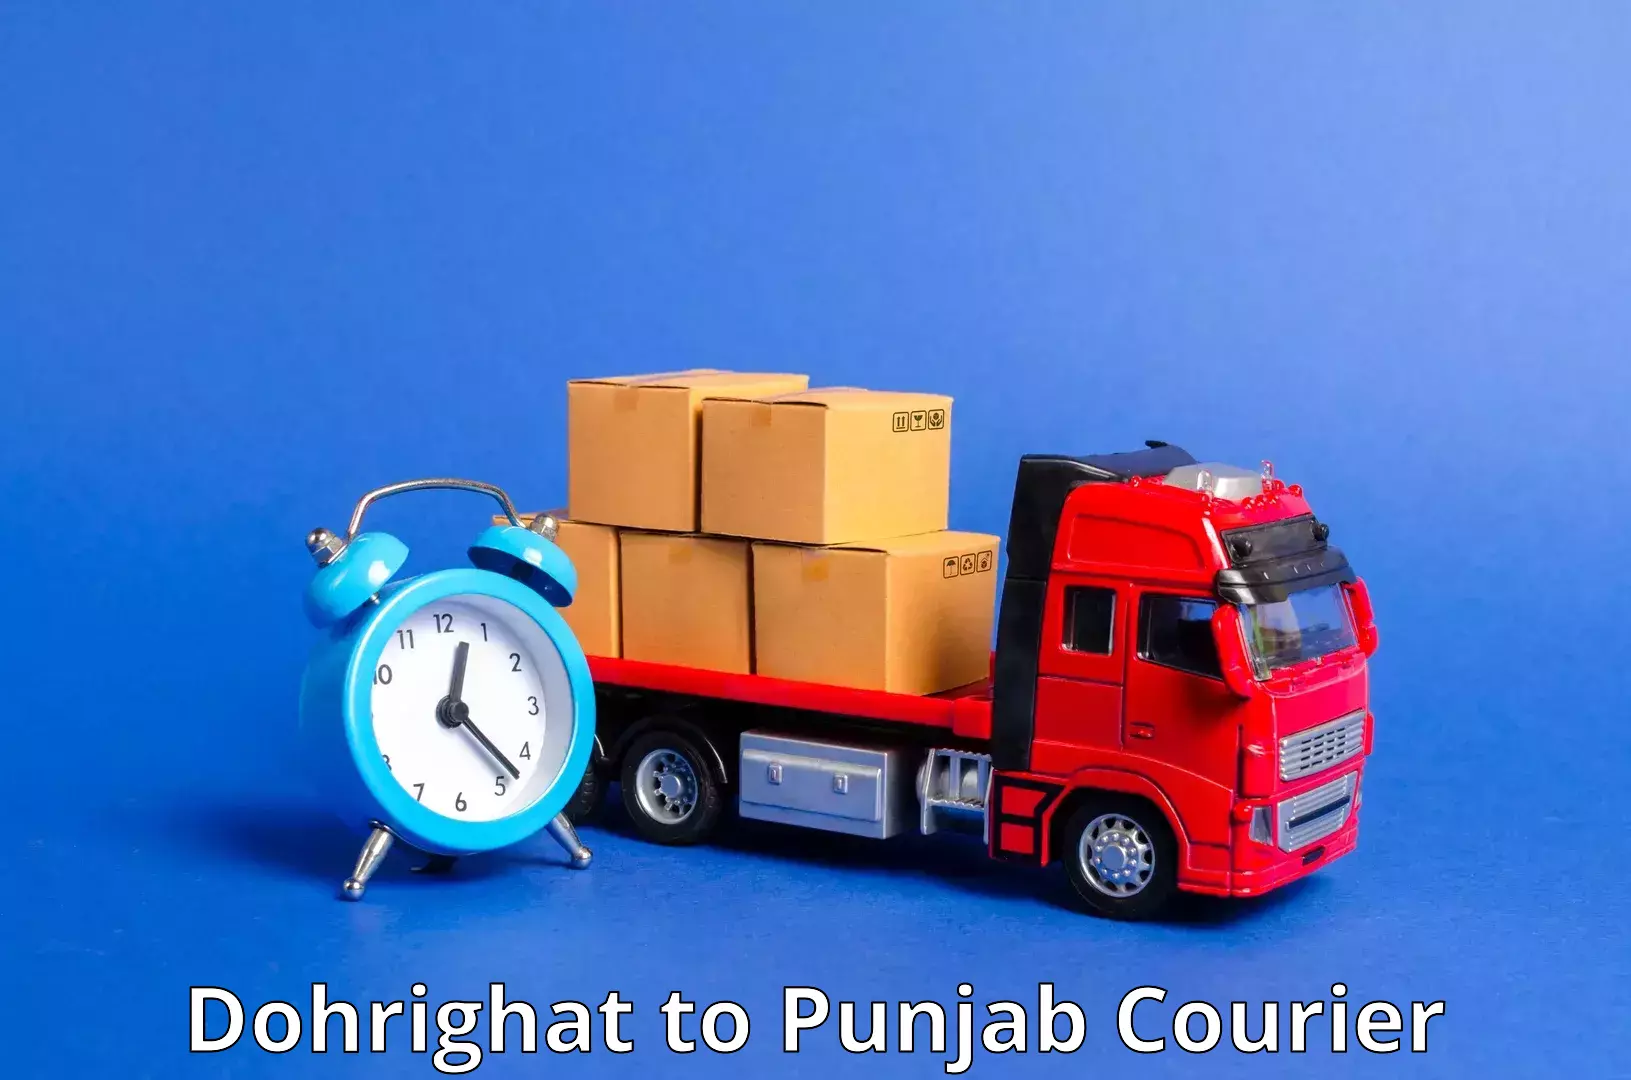 Global logistics network Dohrighat to Punjab